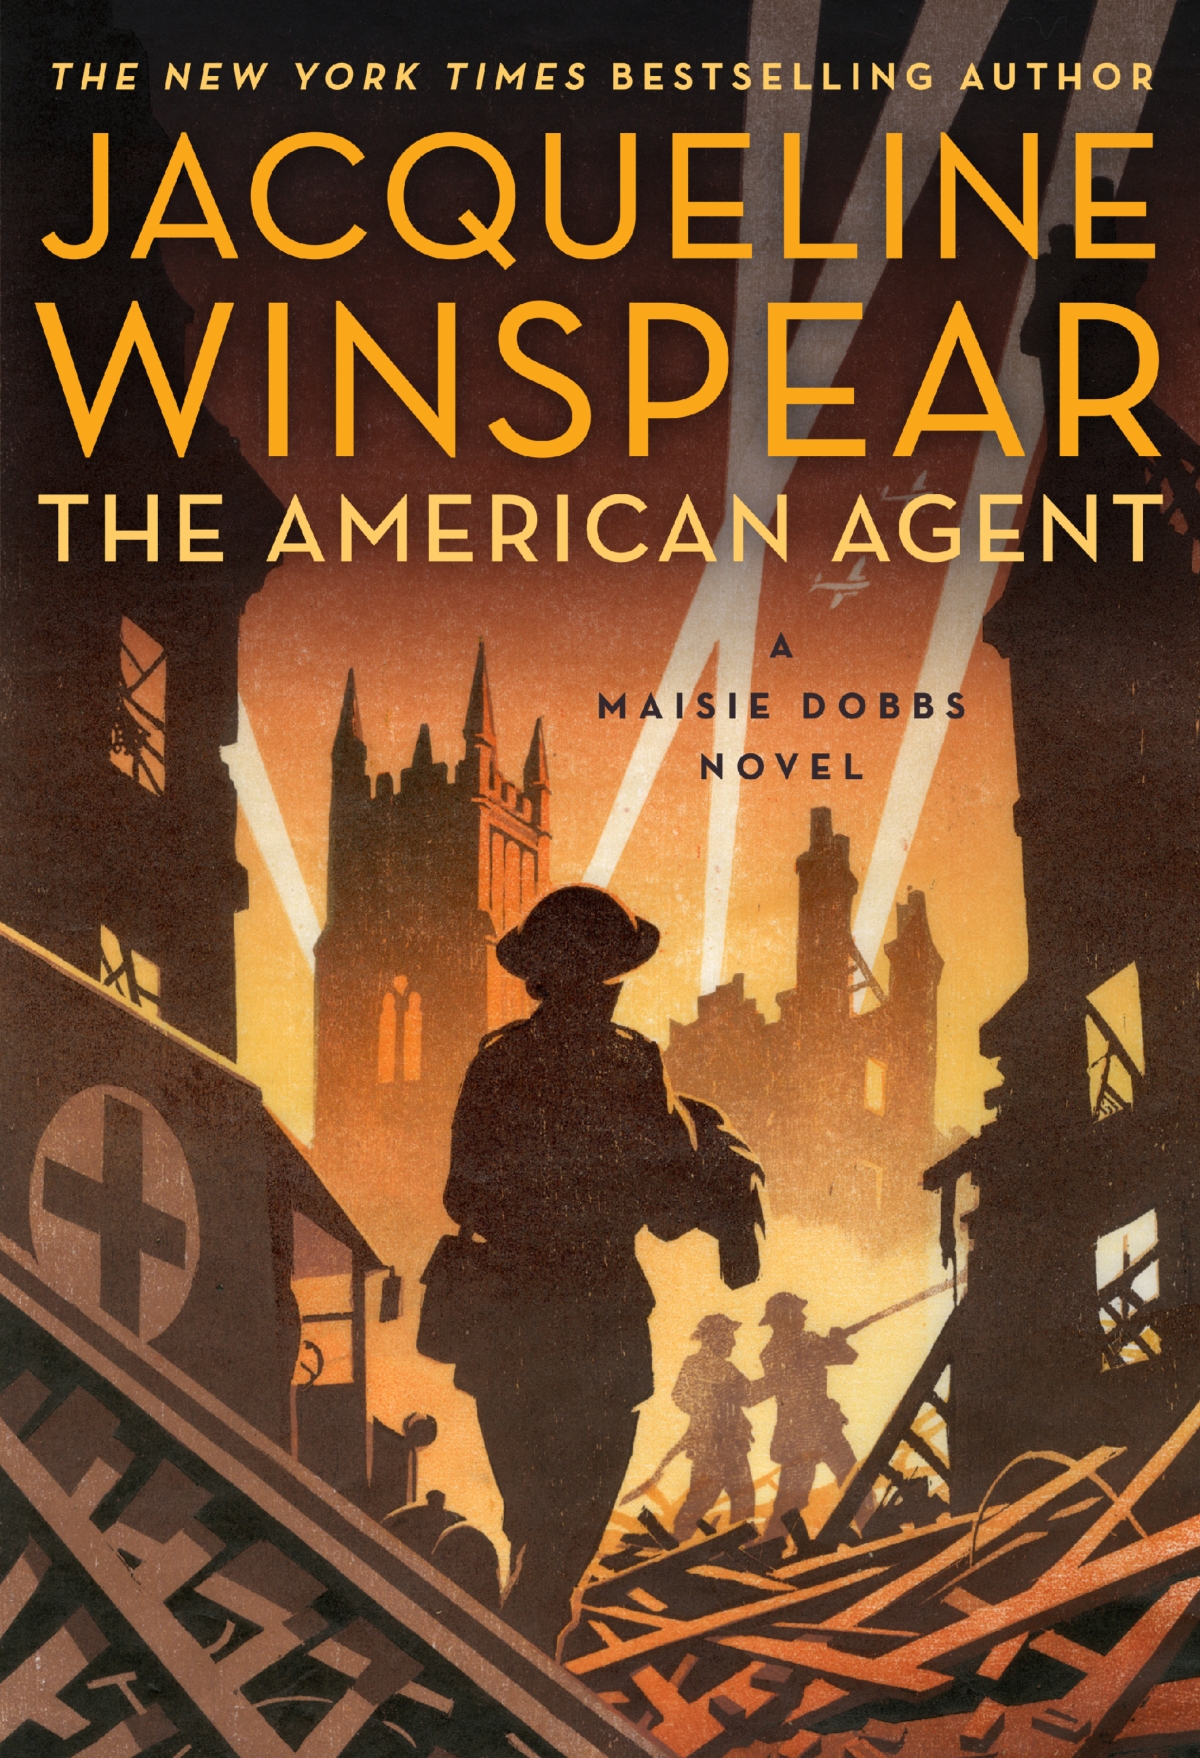 An American Agent: A Maisie Dobbs Novel